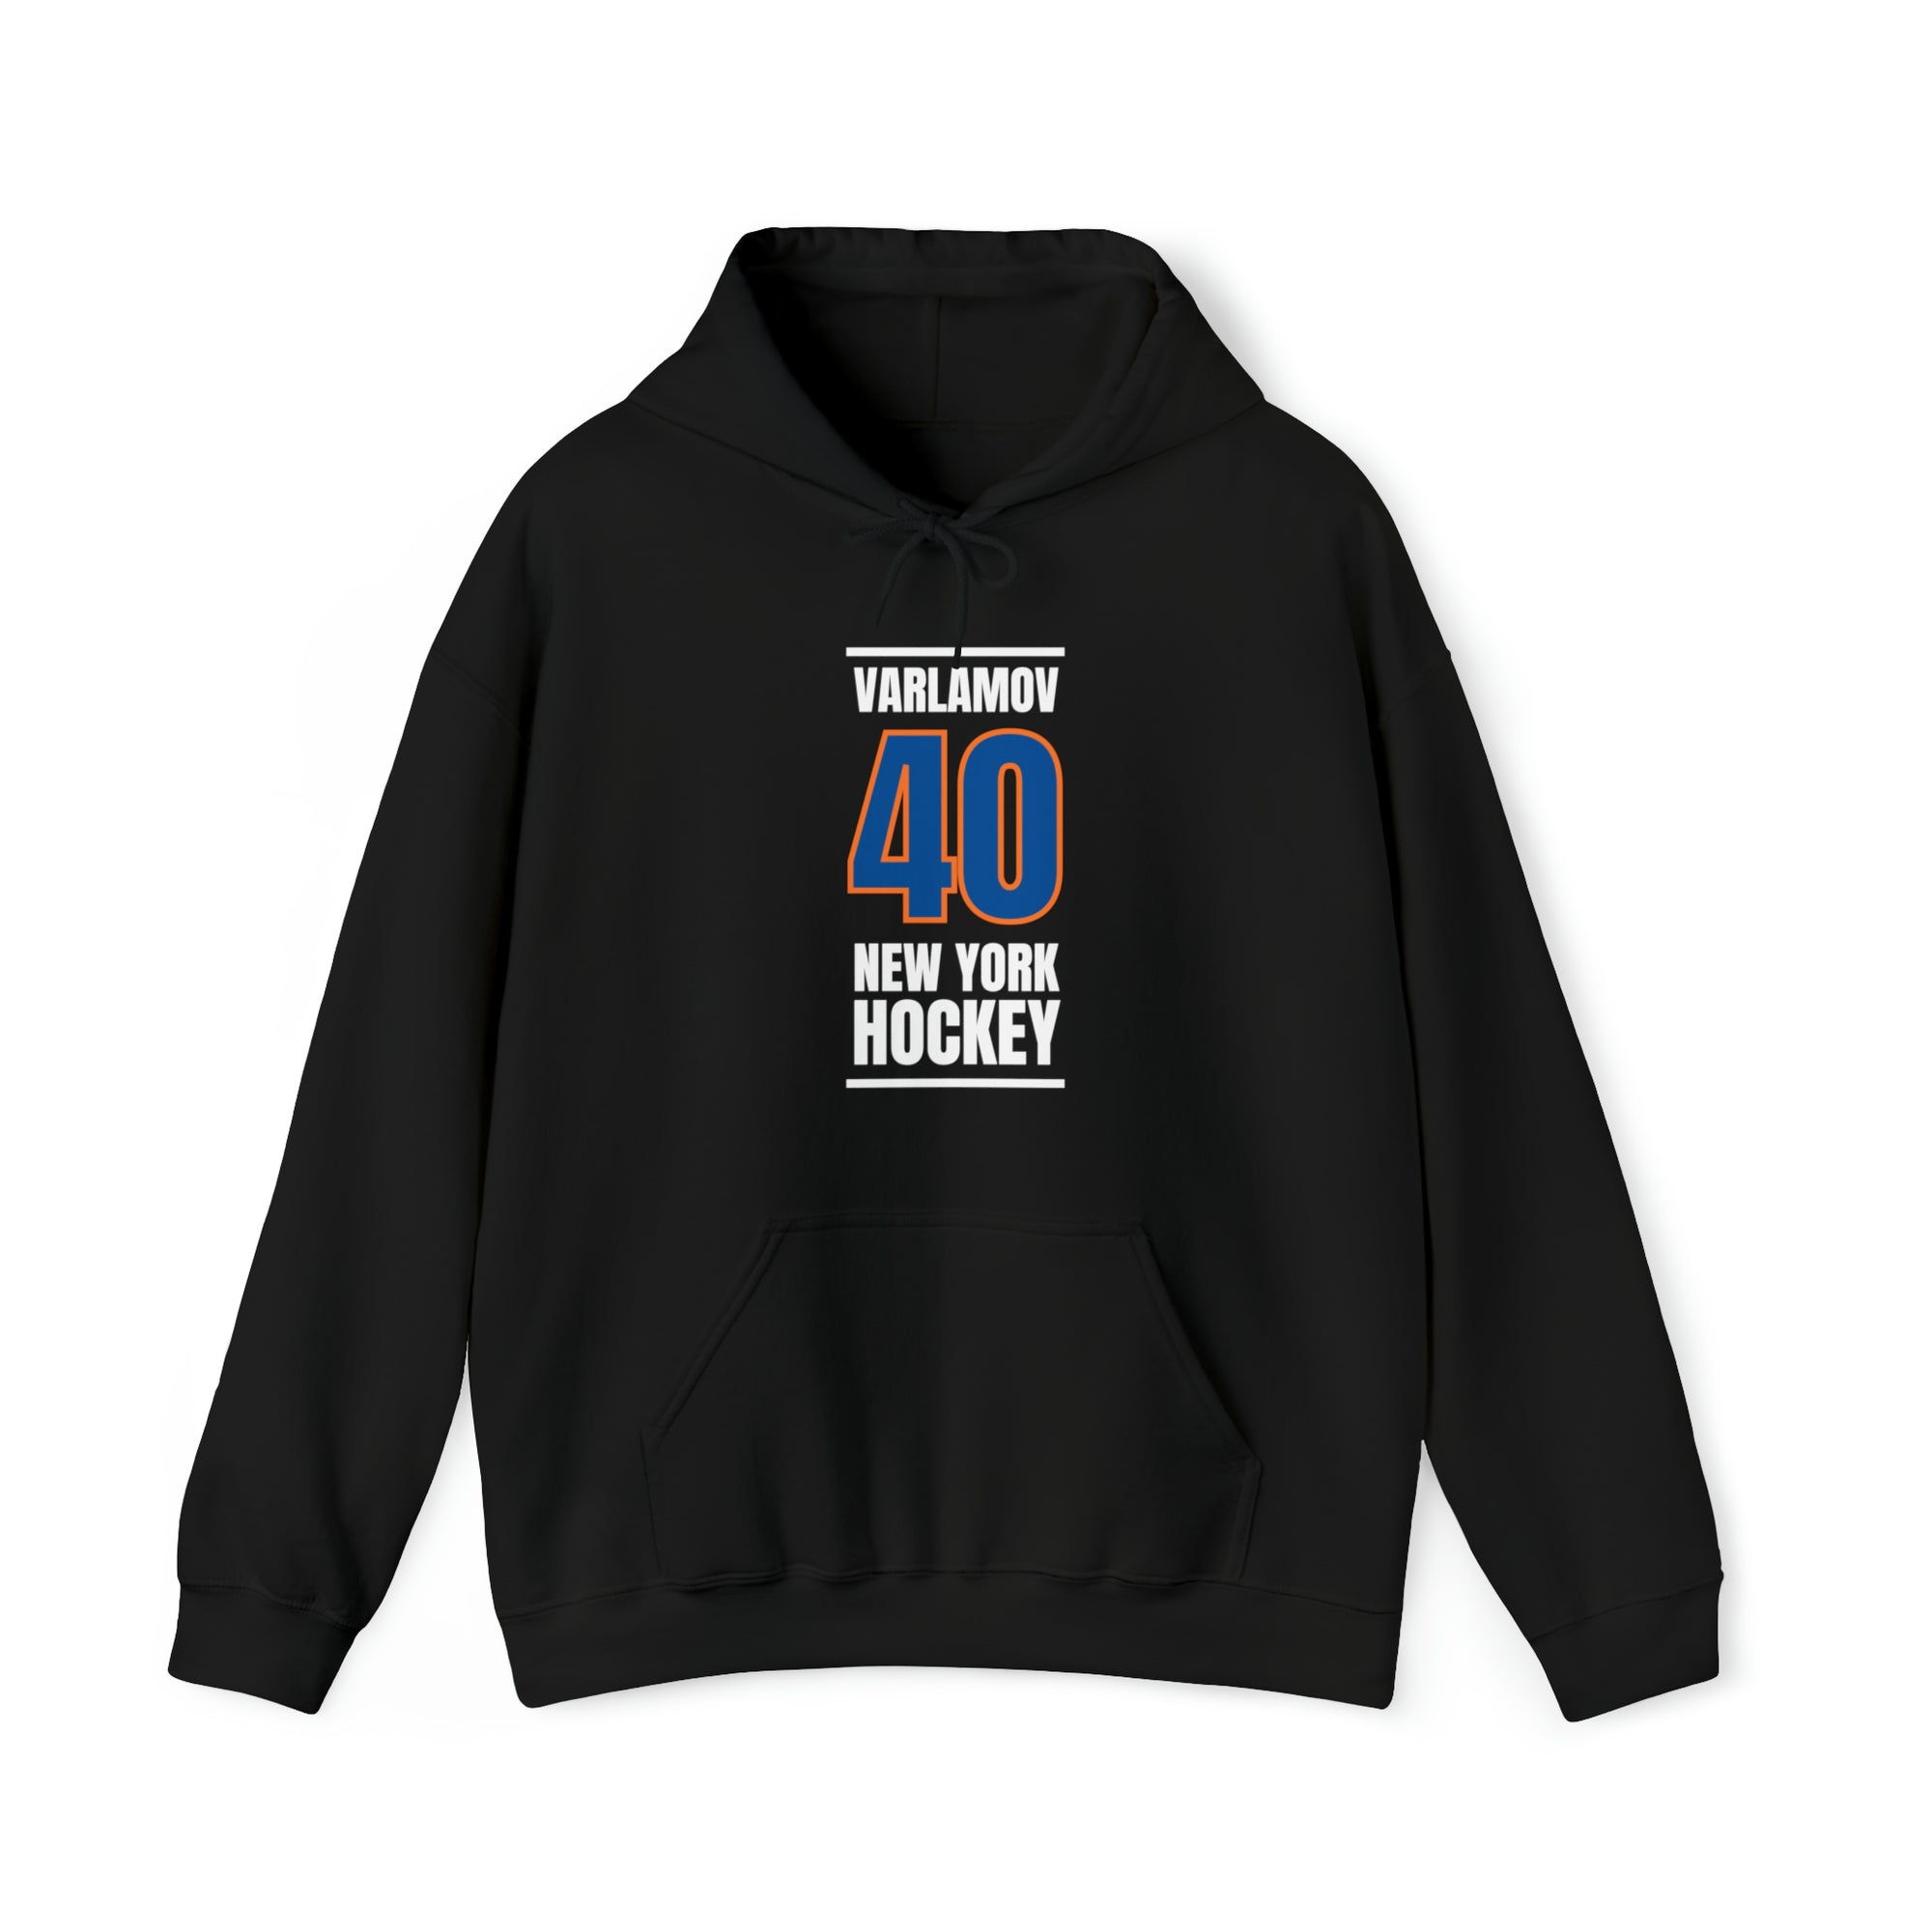 Varlamov 40 New York Hockey Blue Vertical Design Unisex Hooded Sweatshirt